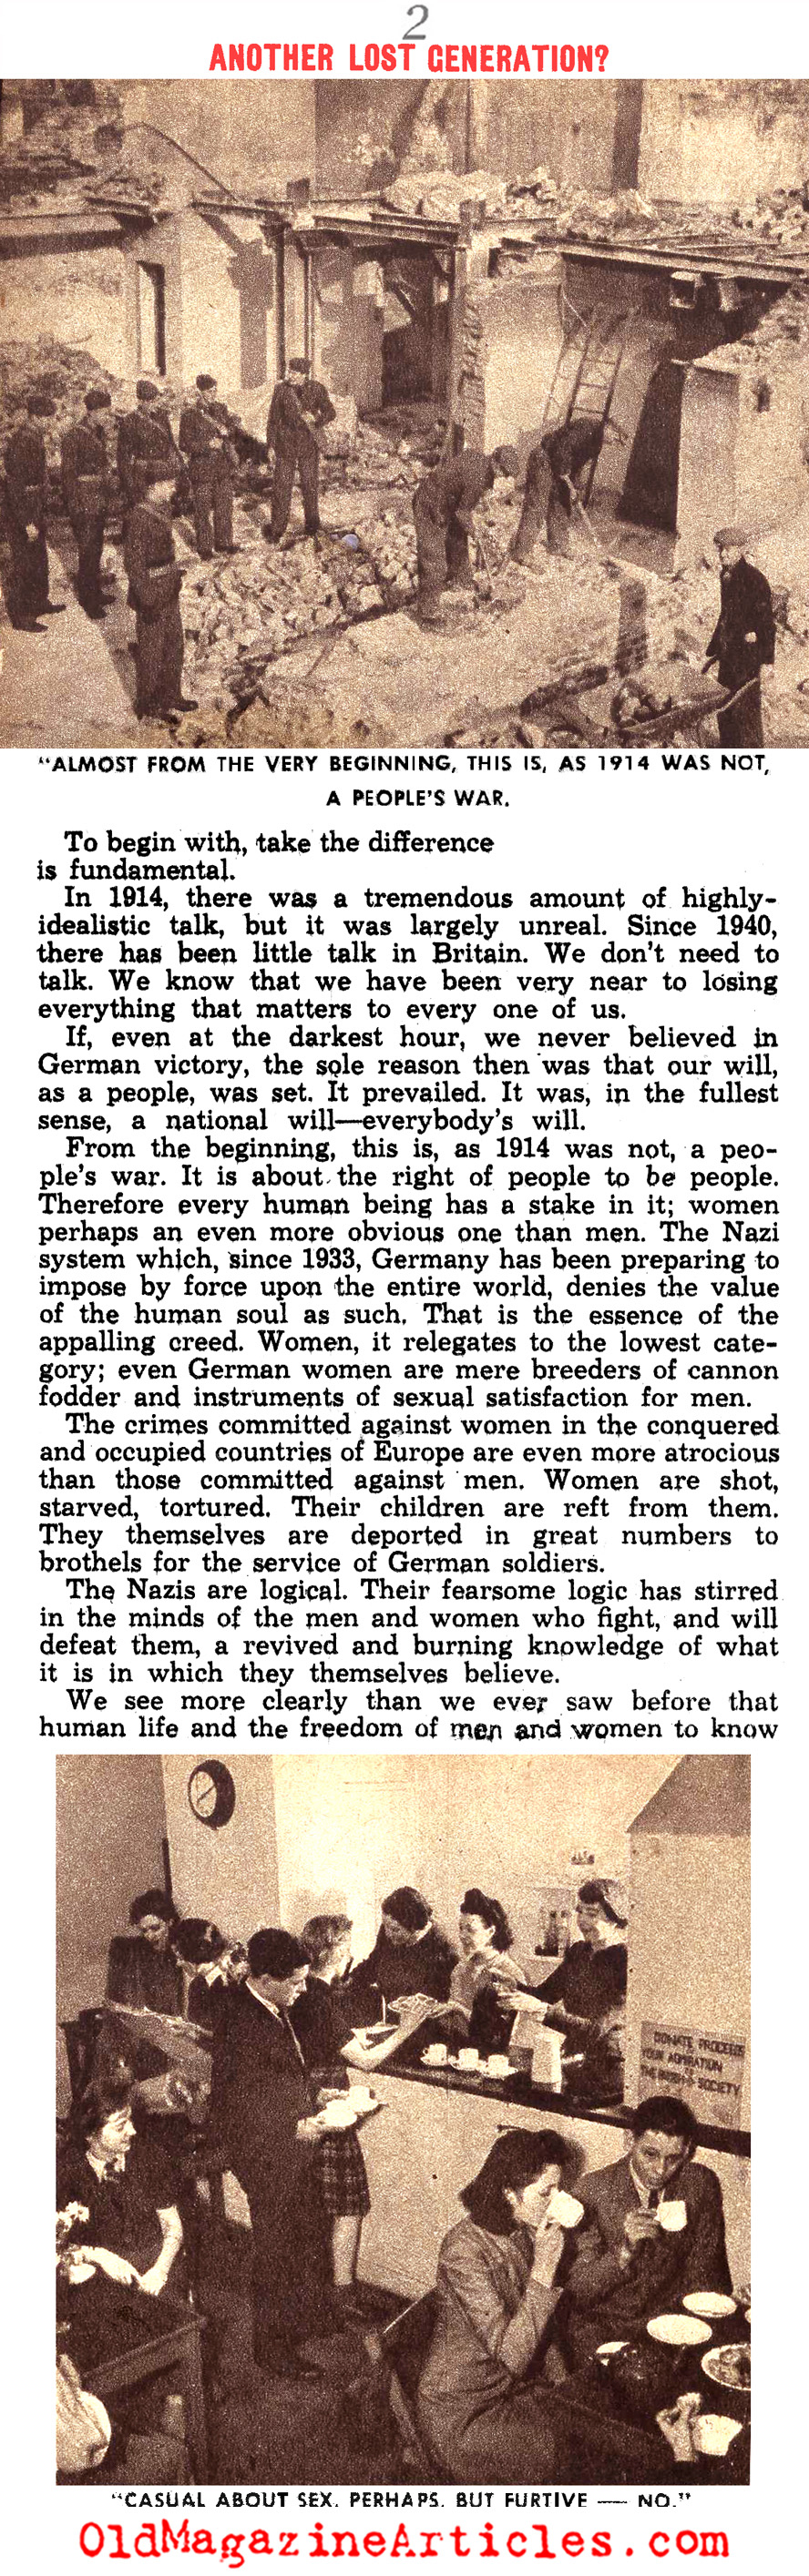 Will Disenchantment Follow This War, Too? (World Magazine, 1944)